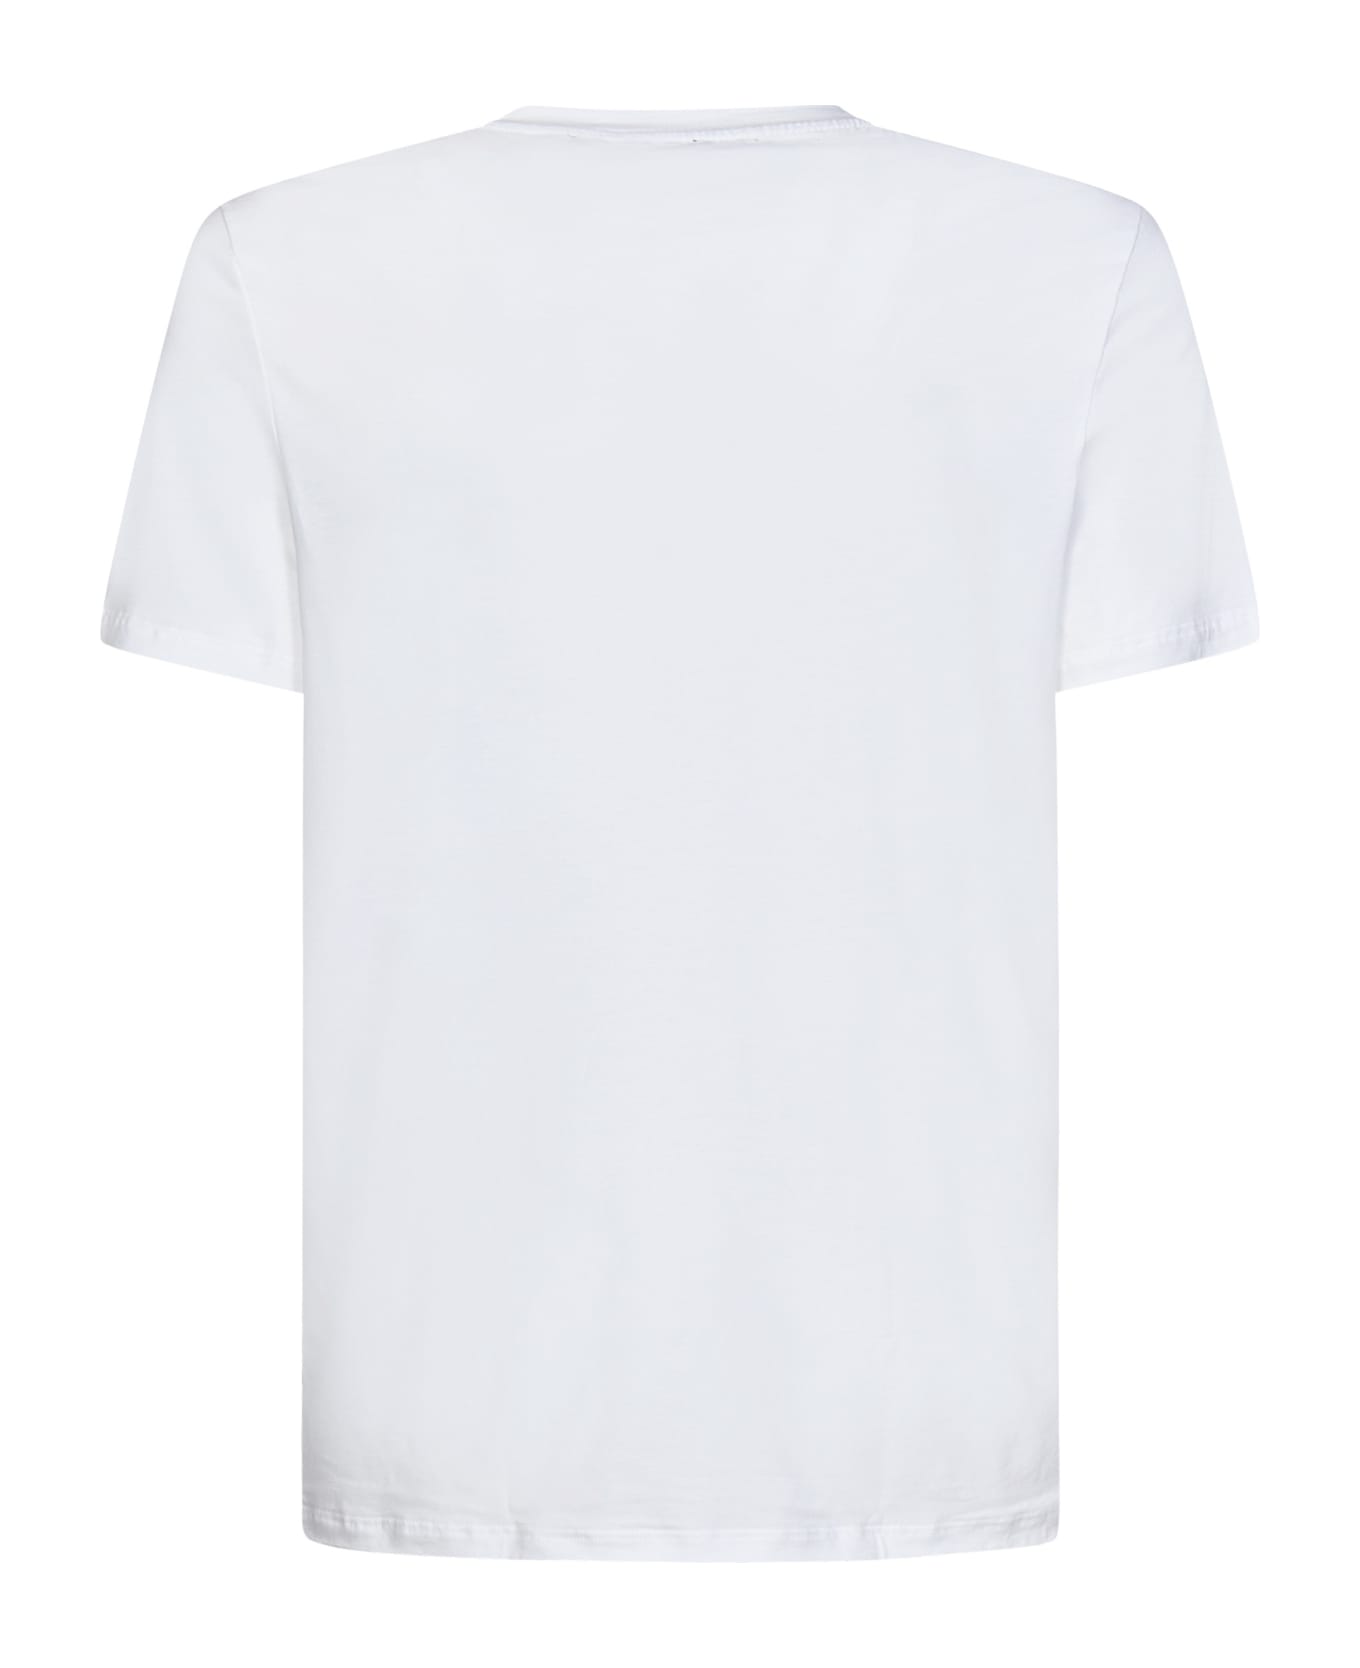 Tom Ford T-shirt - WHITE